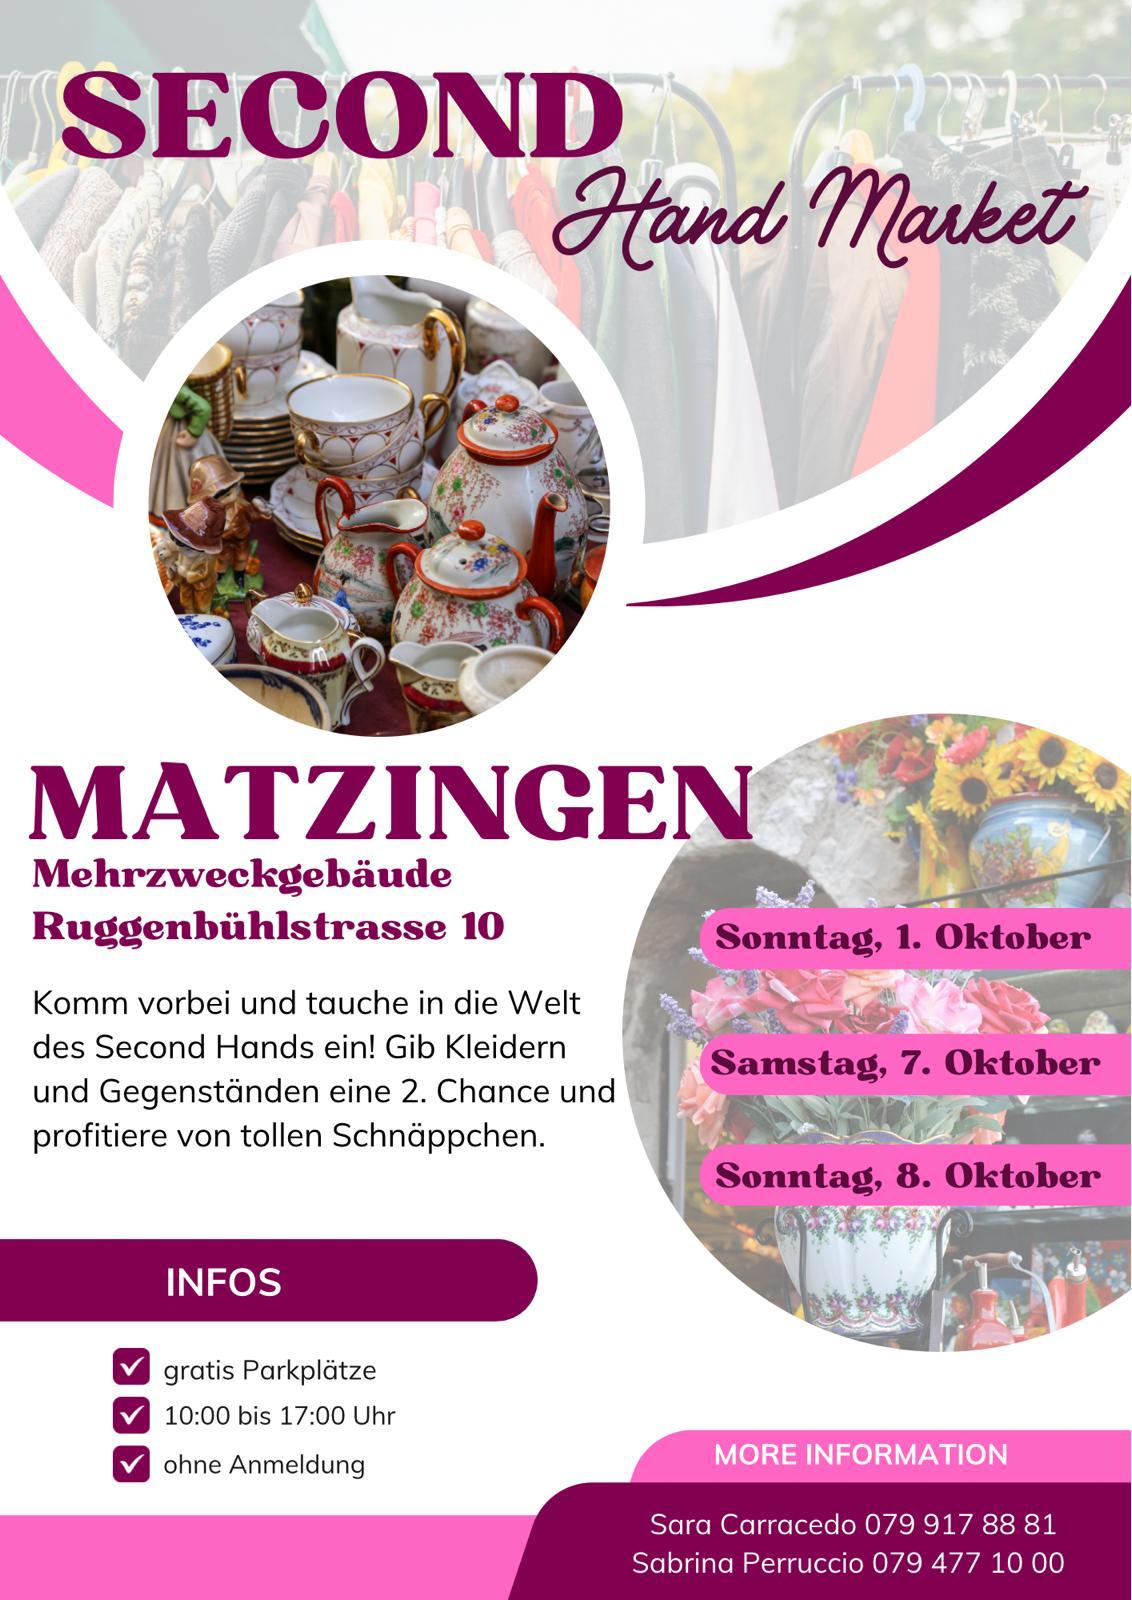 Second Hand Market / Flohmarkt Matzingen